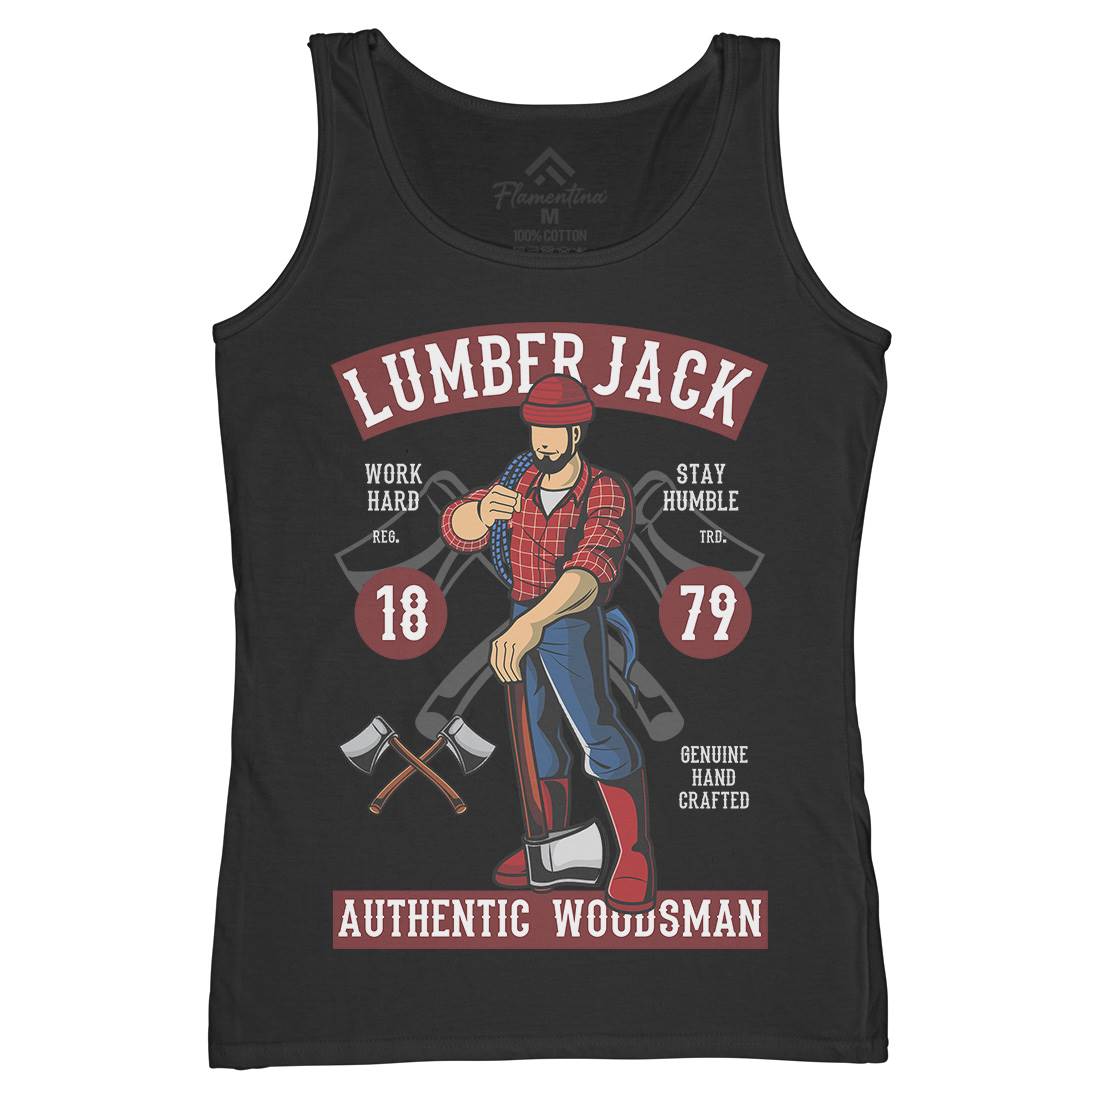 Lumberjack Womens Organic Tank Top Vest Work C389